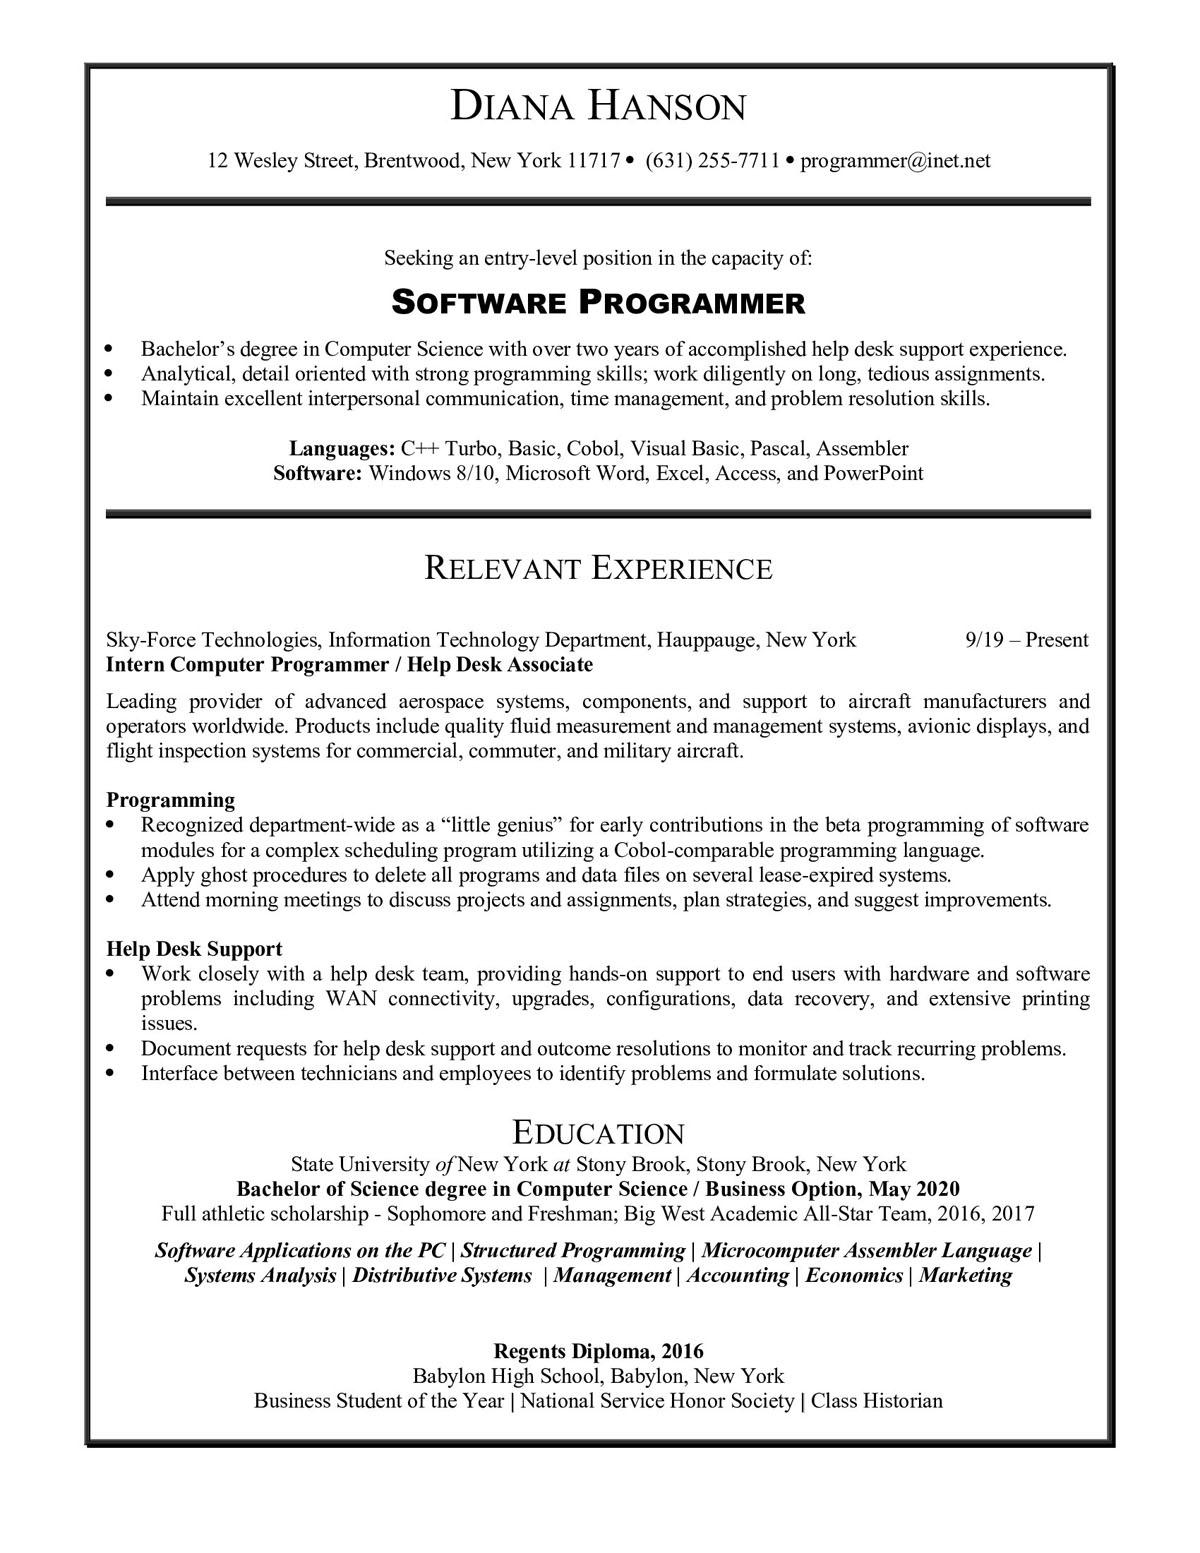 Sample resume: Computer Software, Entry Level, Chronological